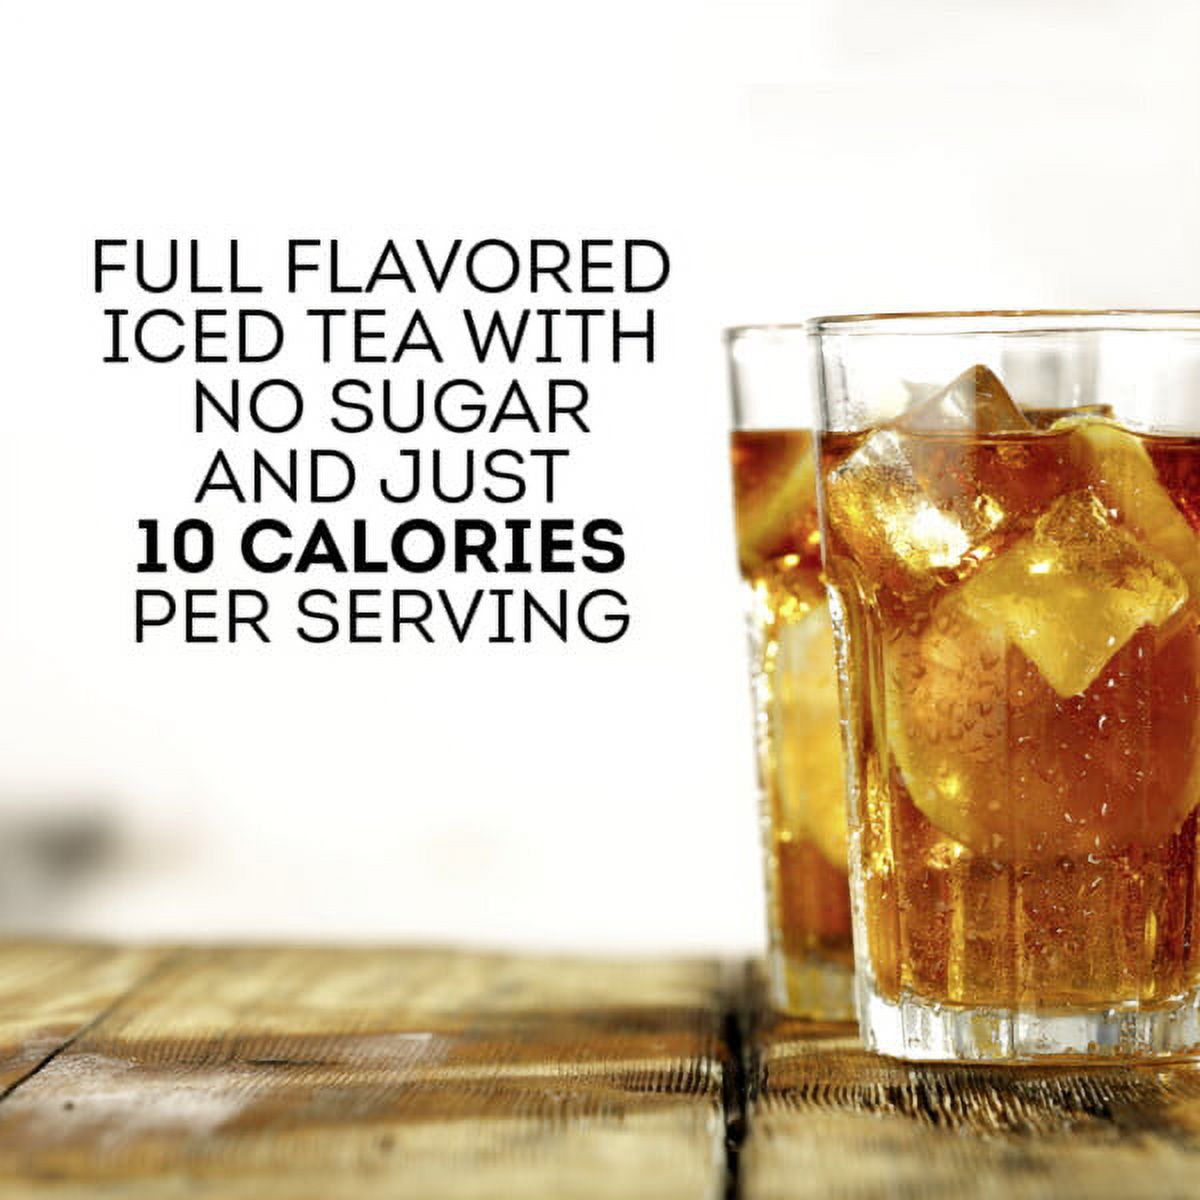 Lipton Iced Tea Mix, Black Tea, Raspberry, Caffeinated, Sugar-Free, Makes 10 Quarts - image 10 of 10